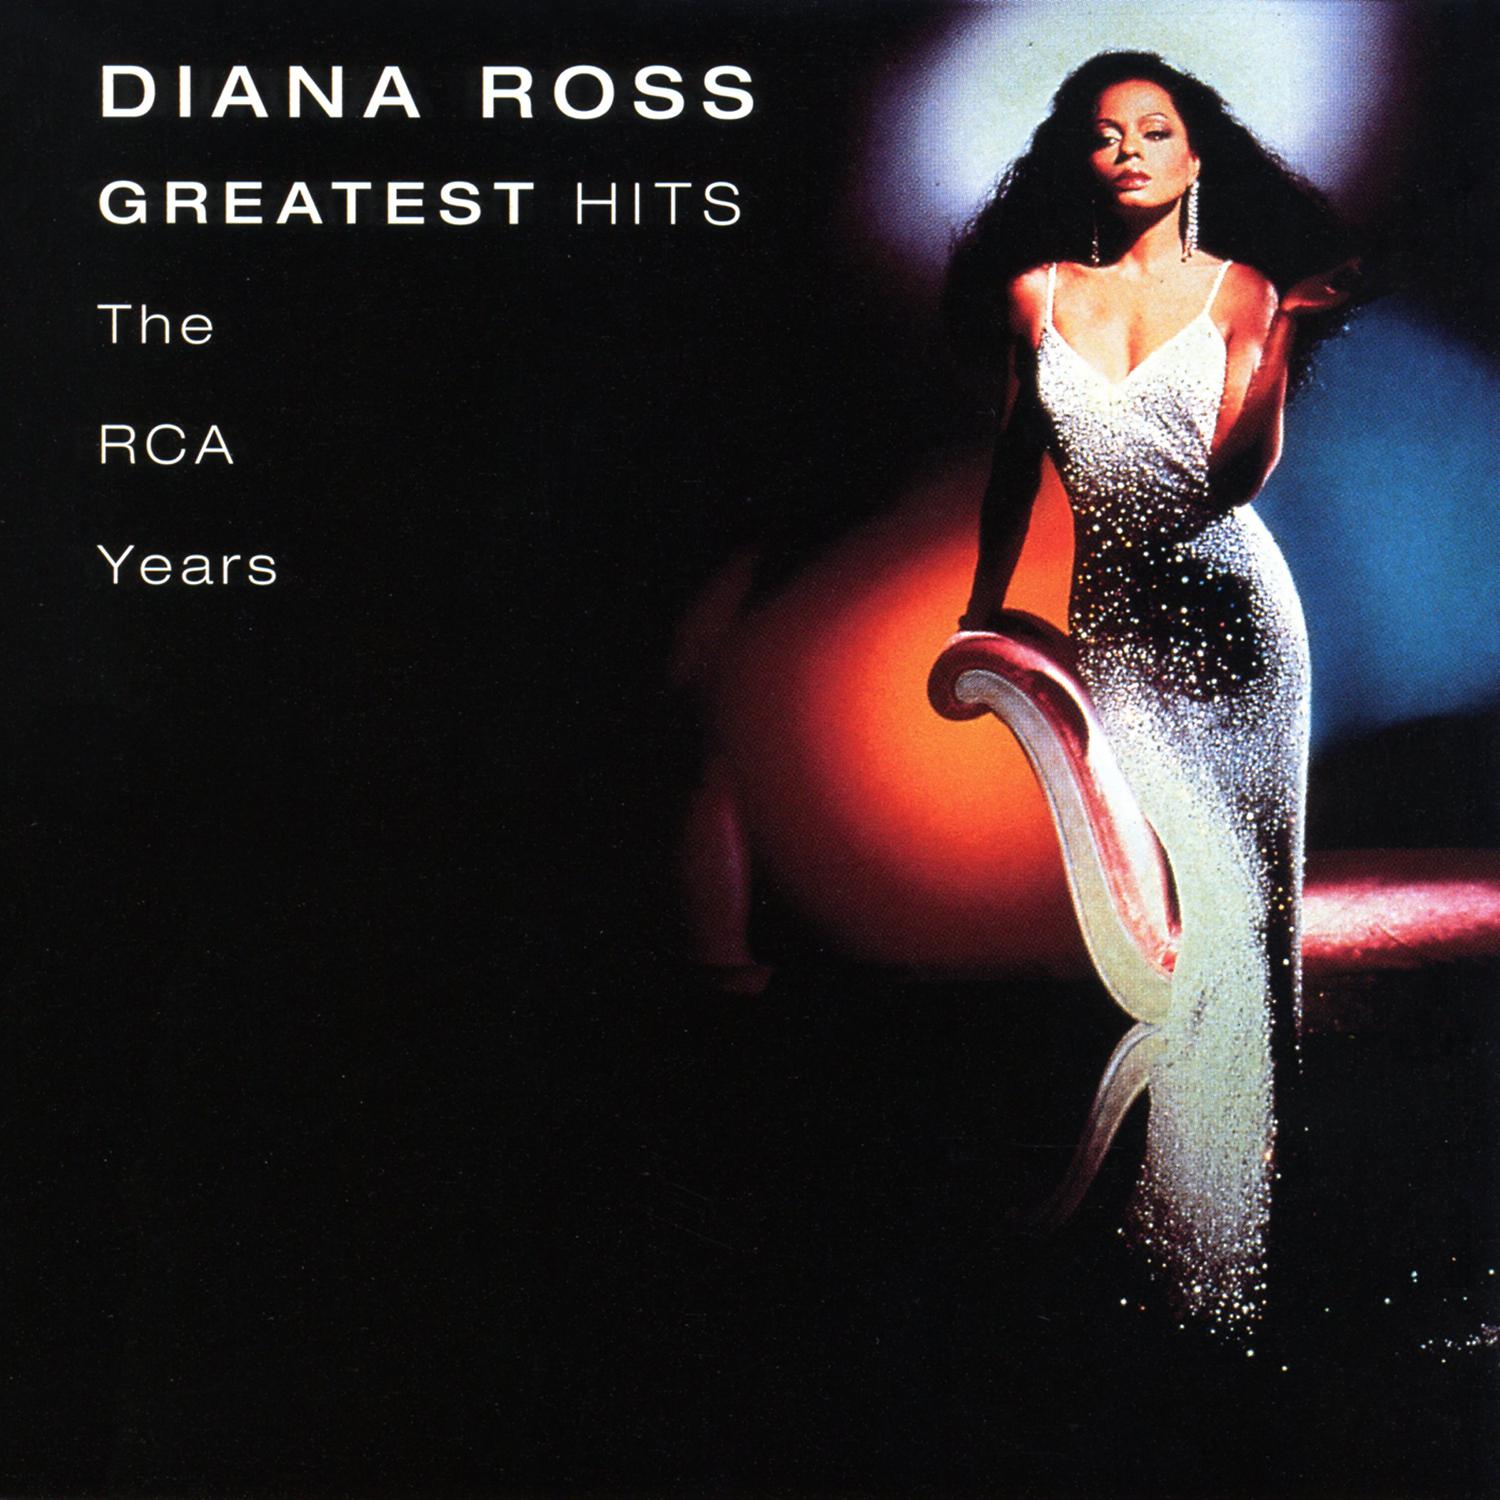 Diana Ross - Greatest Hits: The RCA Years (1997/2015) [HDTracks FLAC 24bit/96kHz]